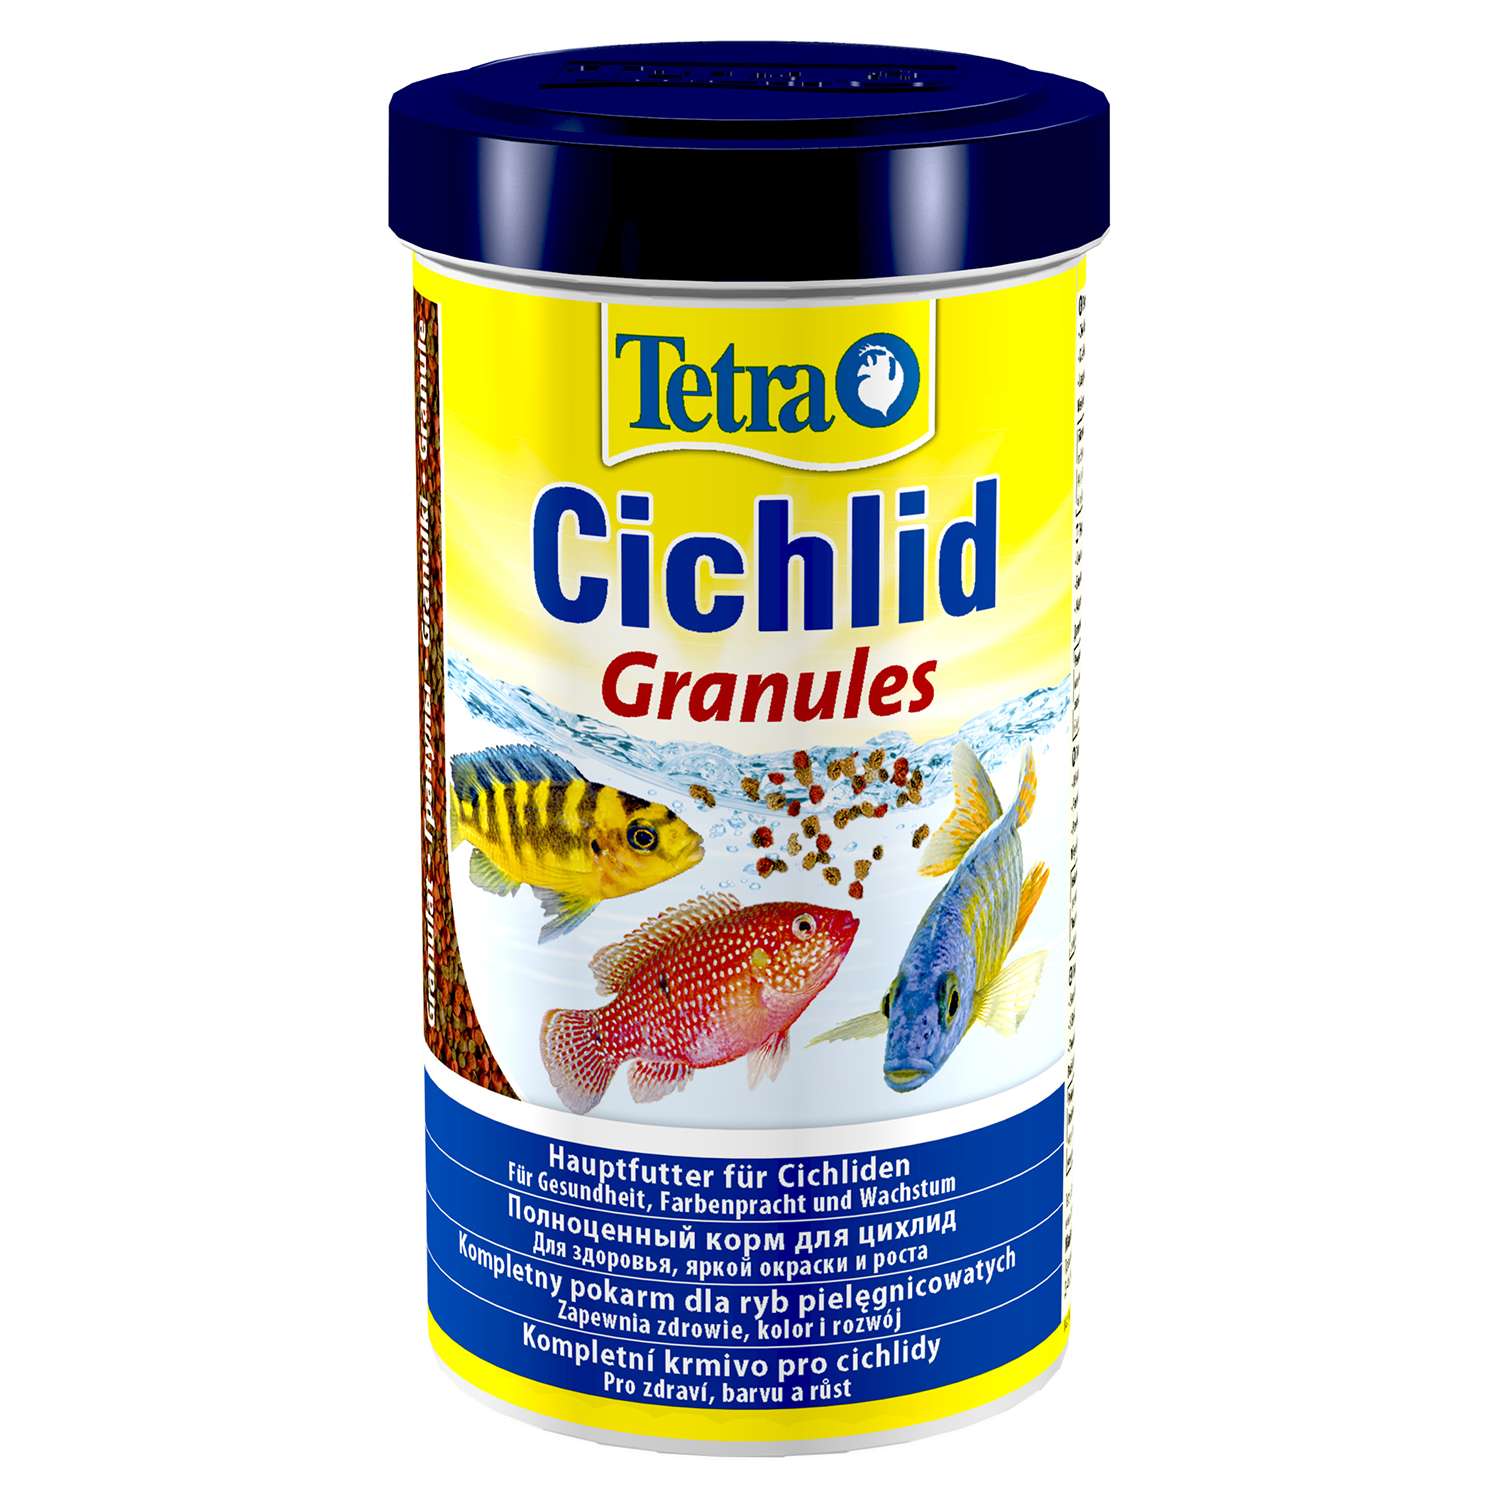 Корм дял рыб Tetra Cichlid Granules всех видов цихлид в гранулах 500мл - фото 1